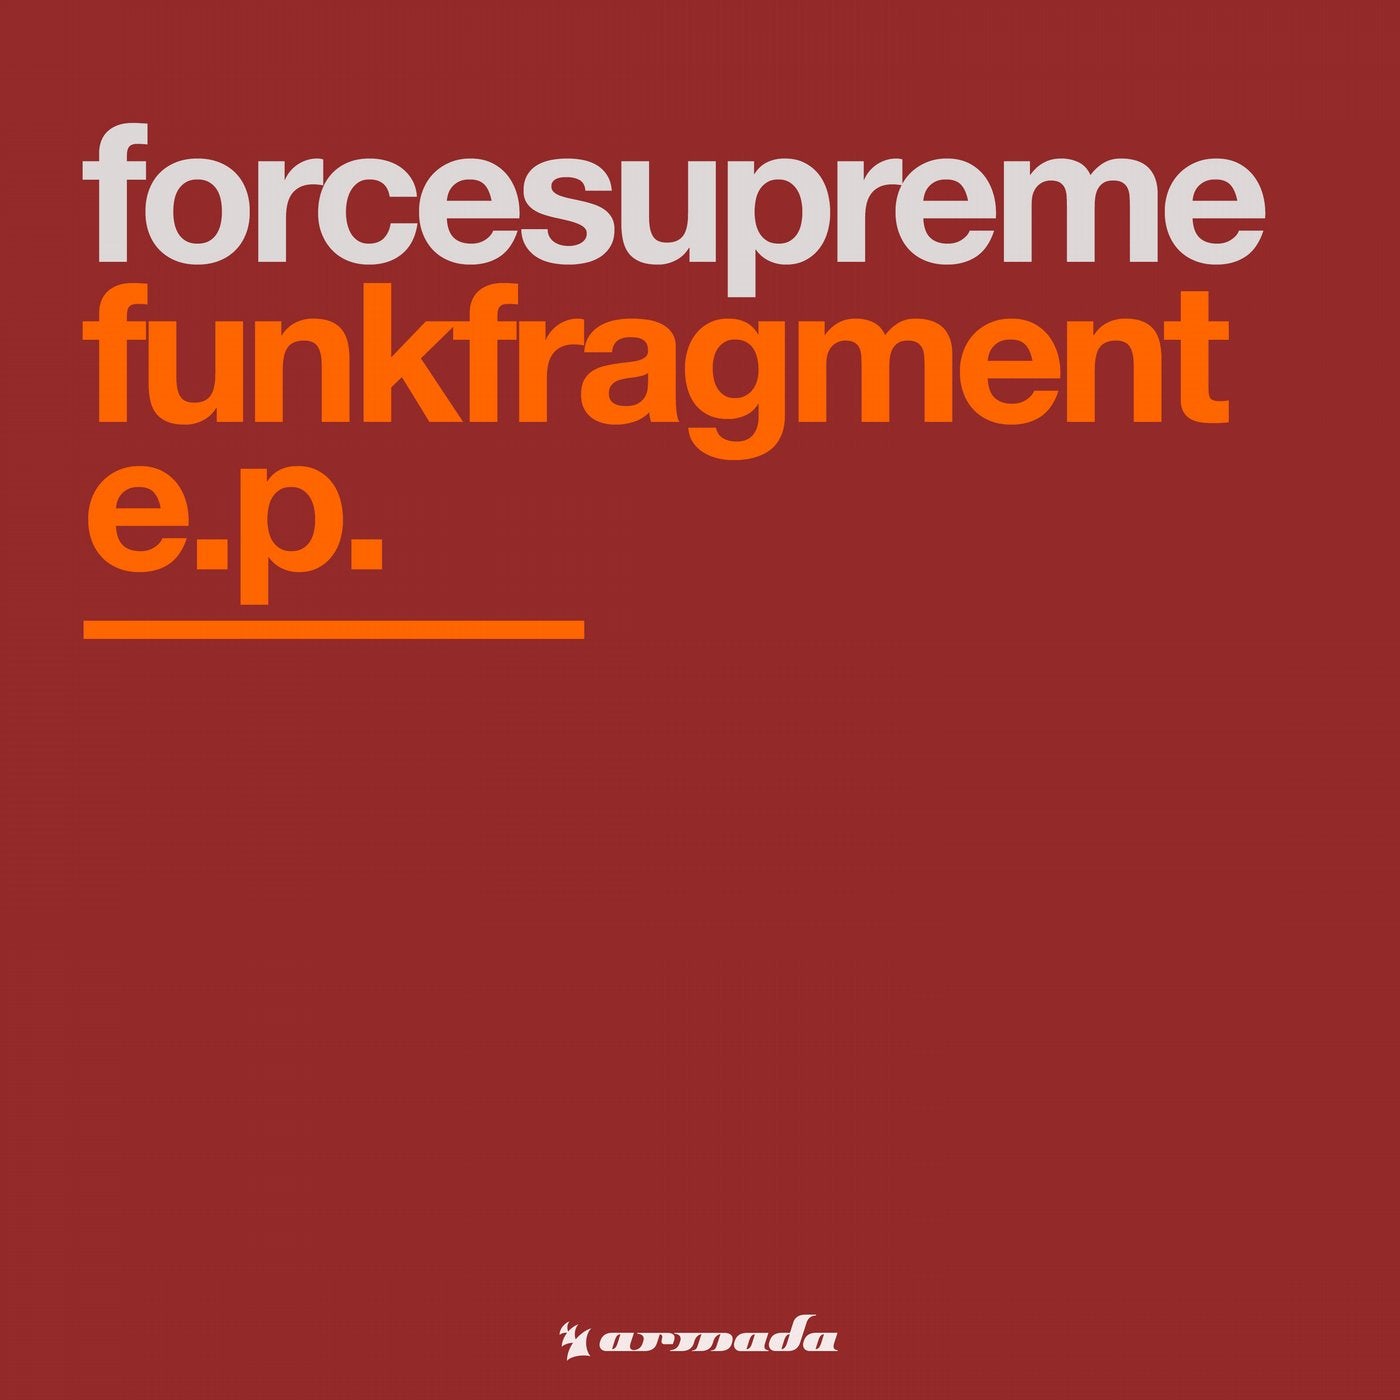 Funkfragment E.P.